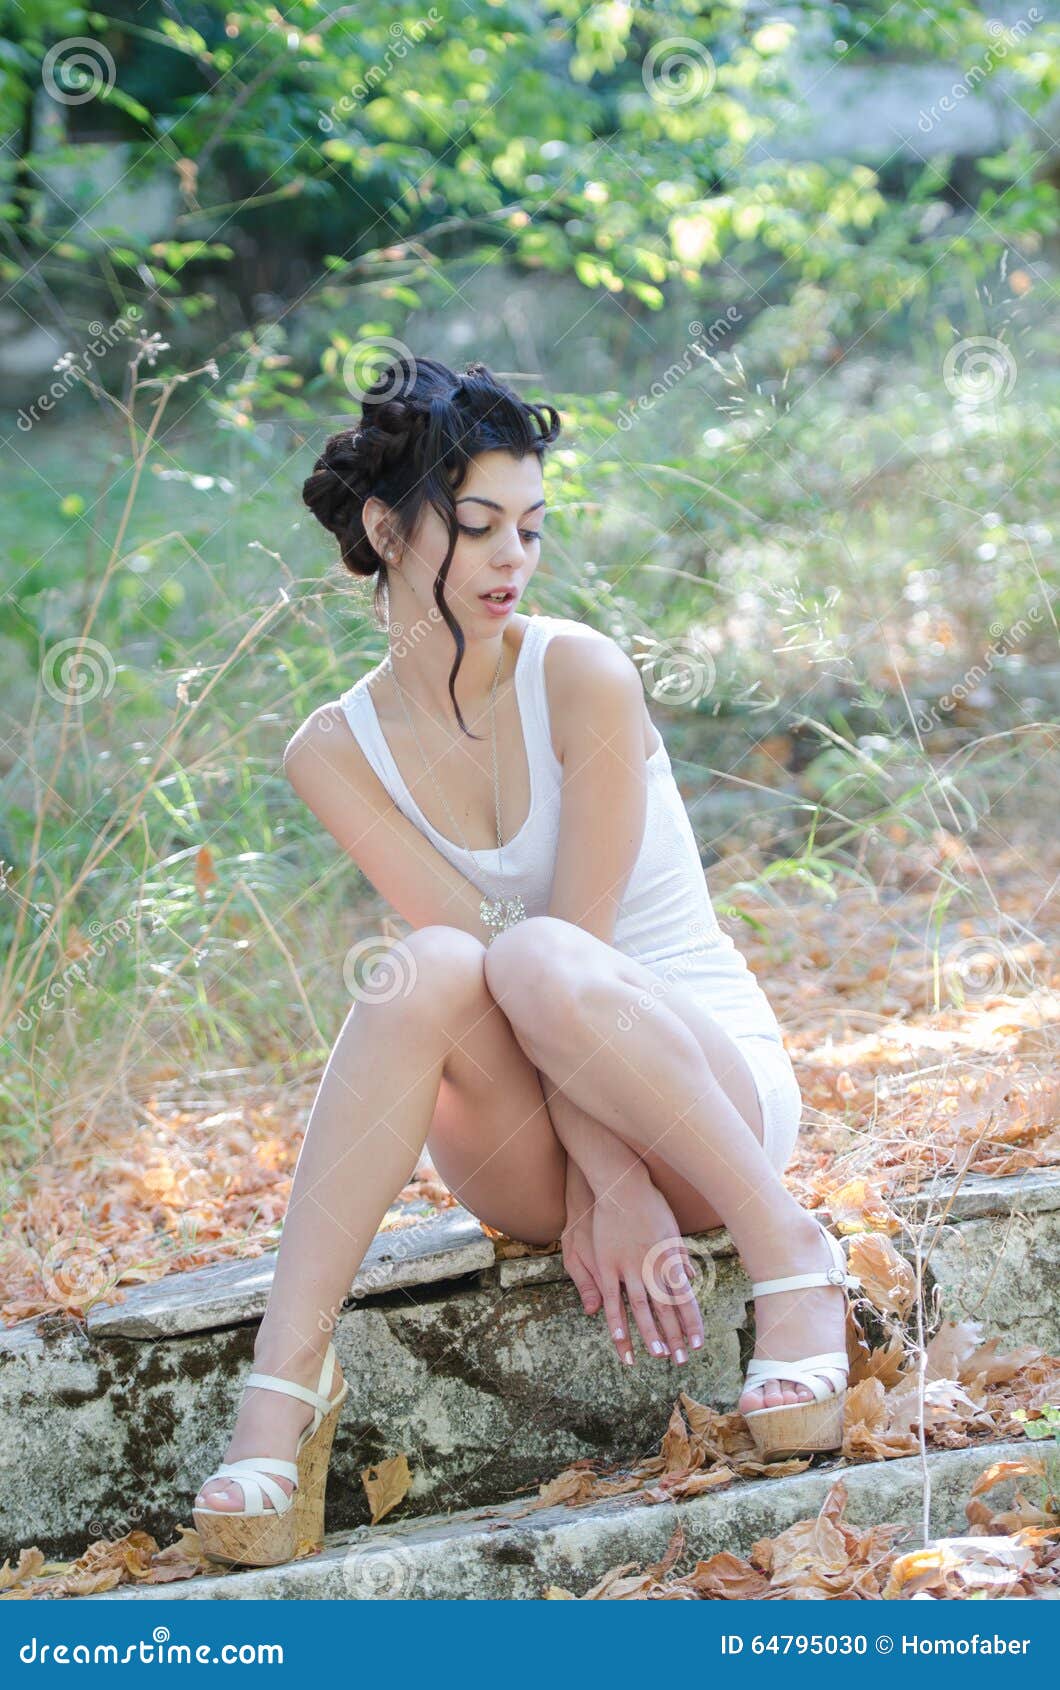 Slim Lady Wear Tight Short White Dress, Sitting on Sidewalk Stock Photo -  Image of gathered, cute: 64795030